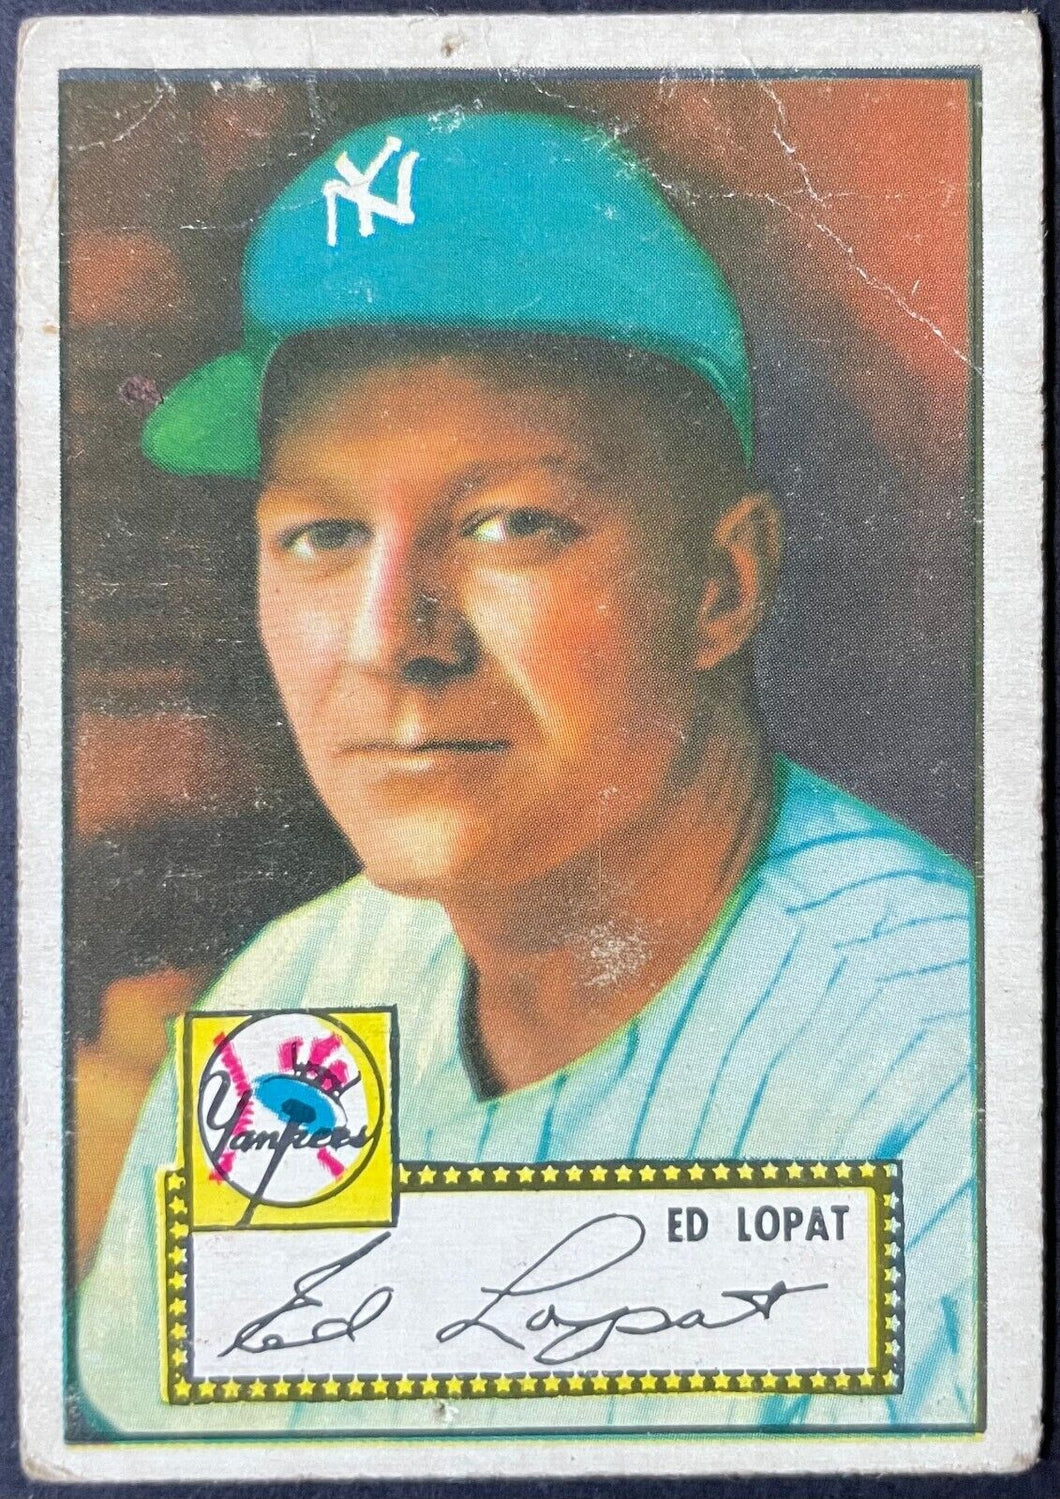 1952 Topps Baseball Ed Lopat #57 New York Yankees Vintage MLB Card